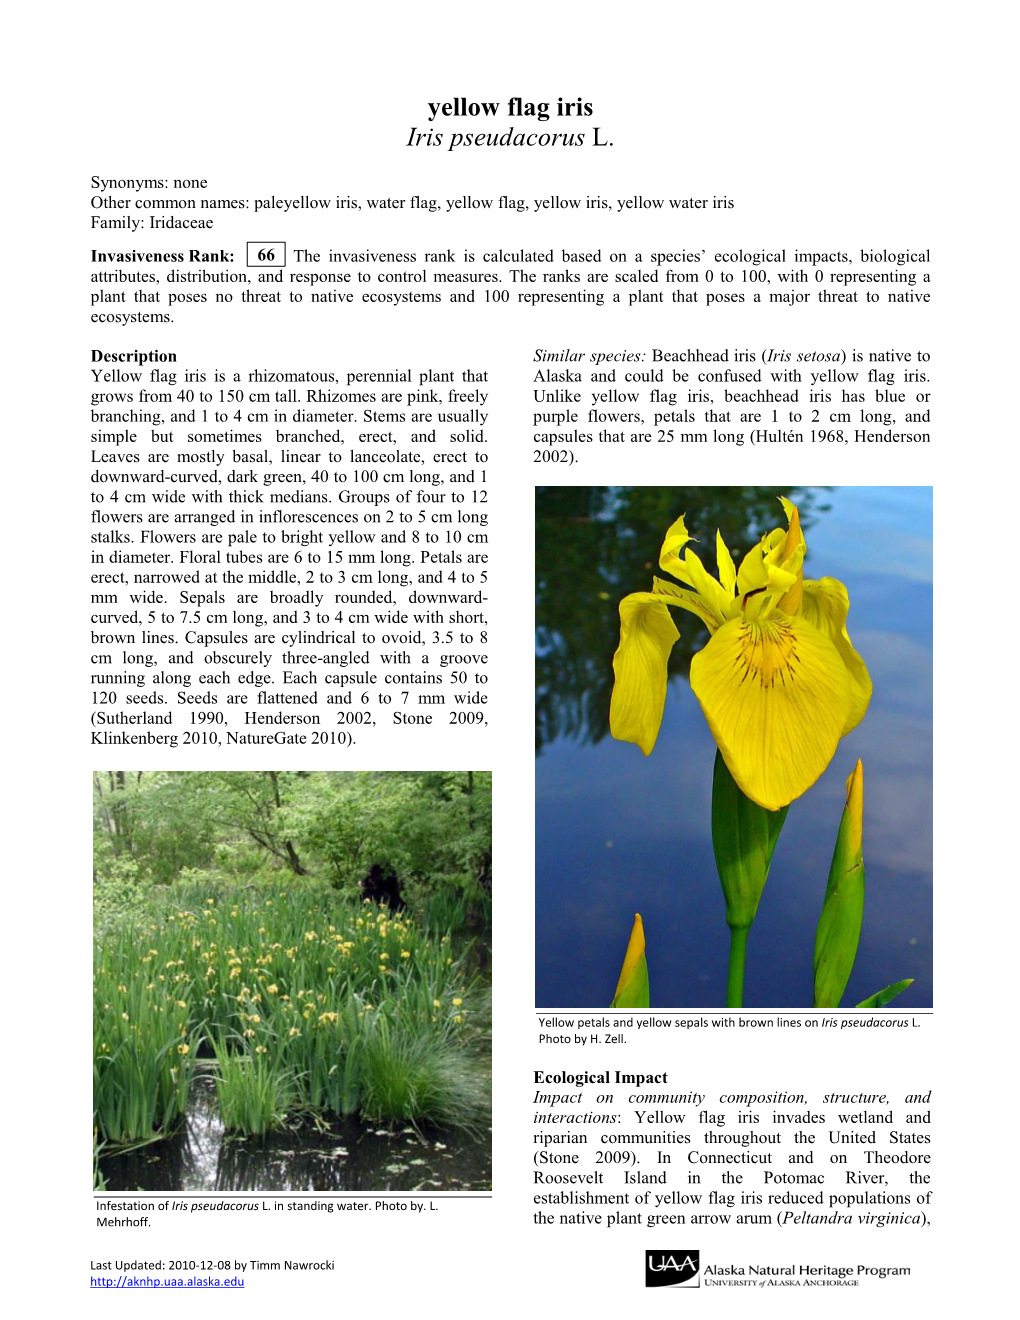 Yellow Flag Iris Iris Pseudacorus L